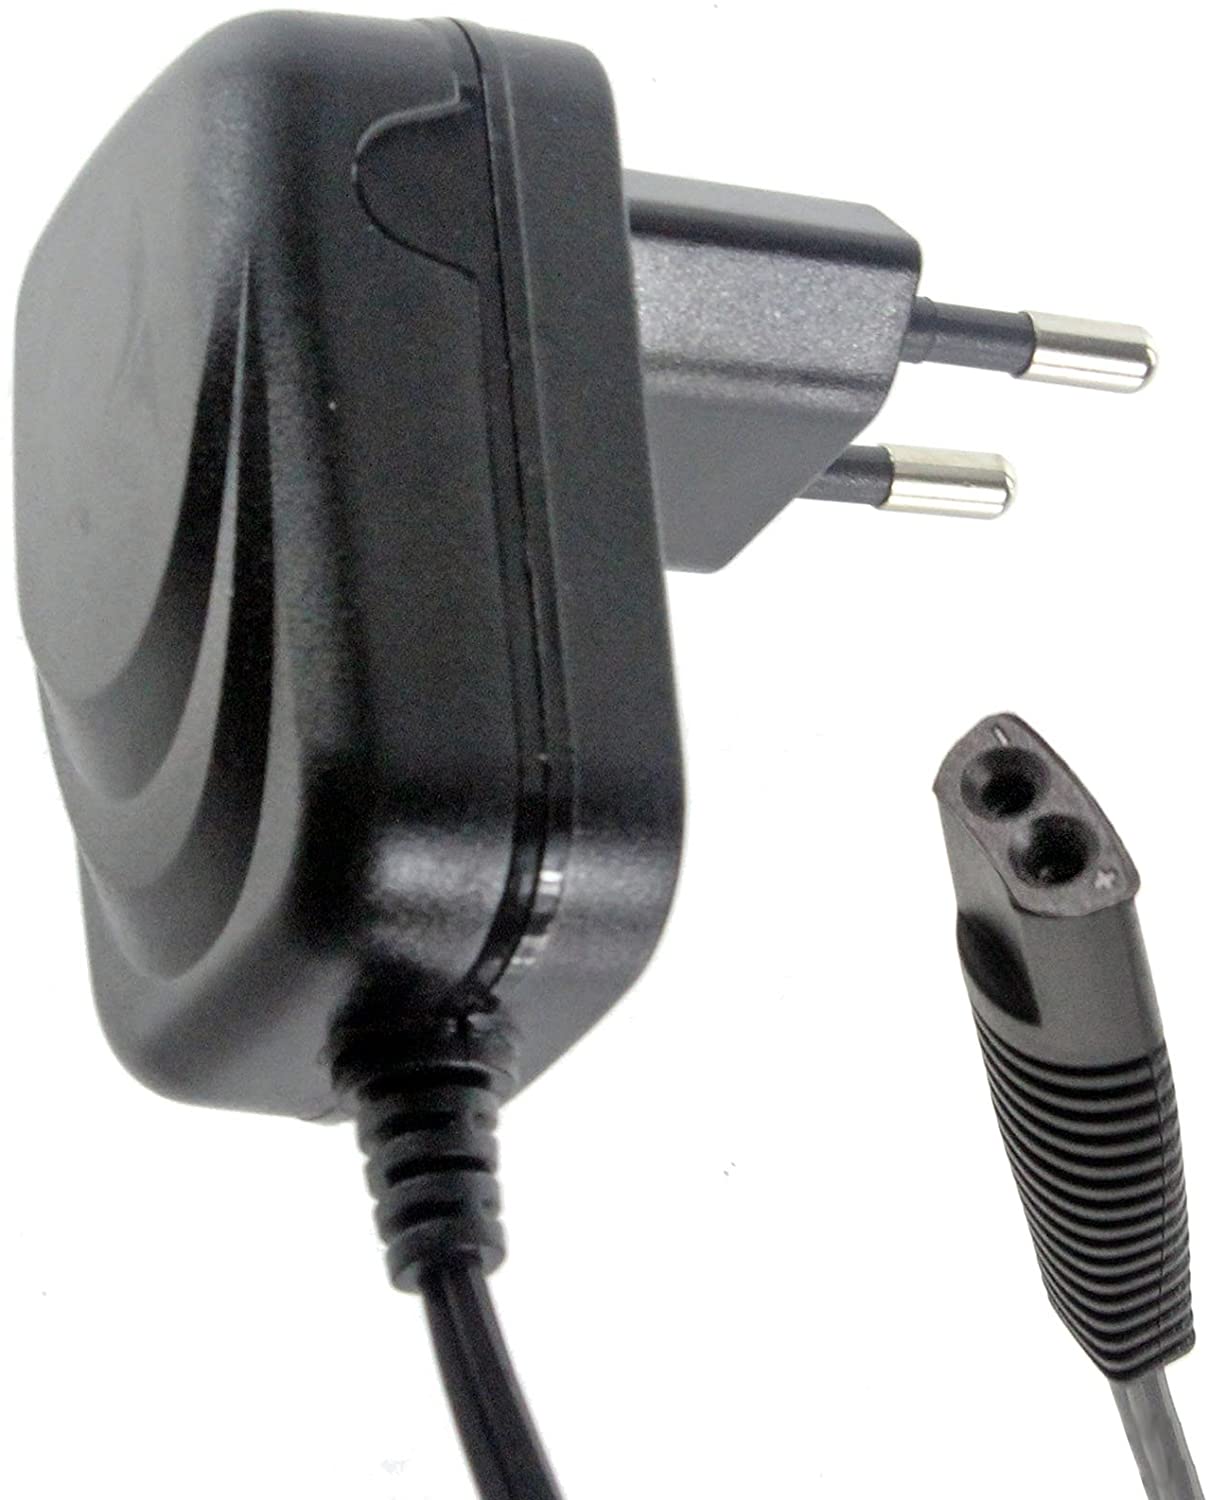 2 Pin BRAUN Shaver Charger EU Plug Cable Series 5 8385 C&R 8374 8377 5751